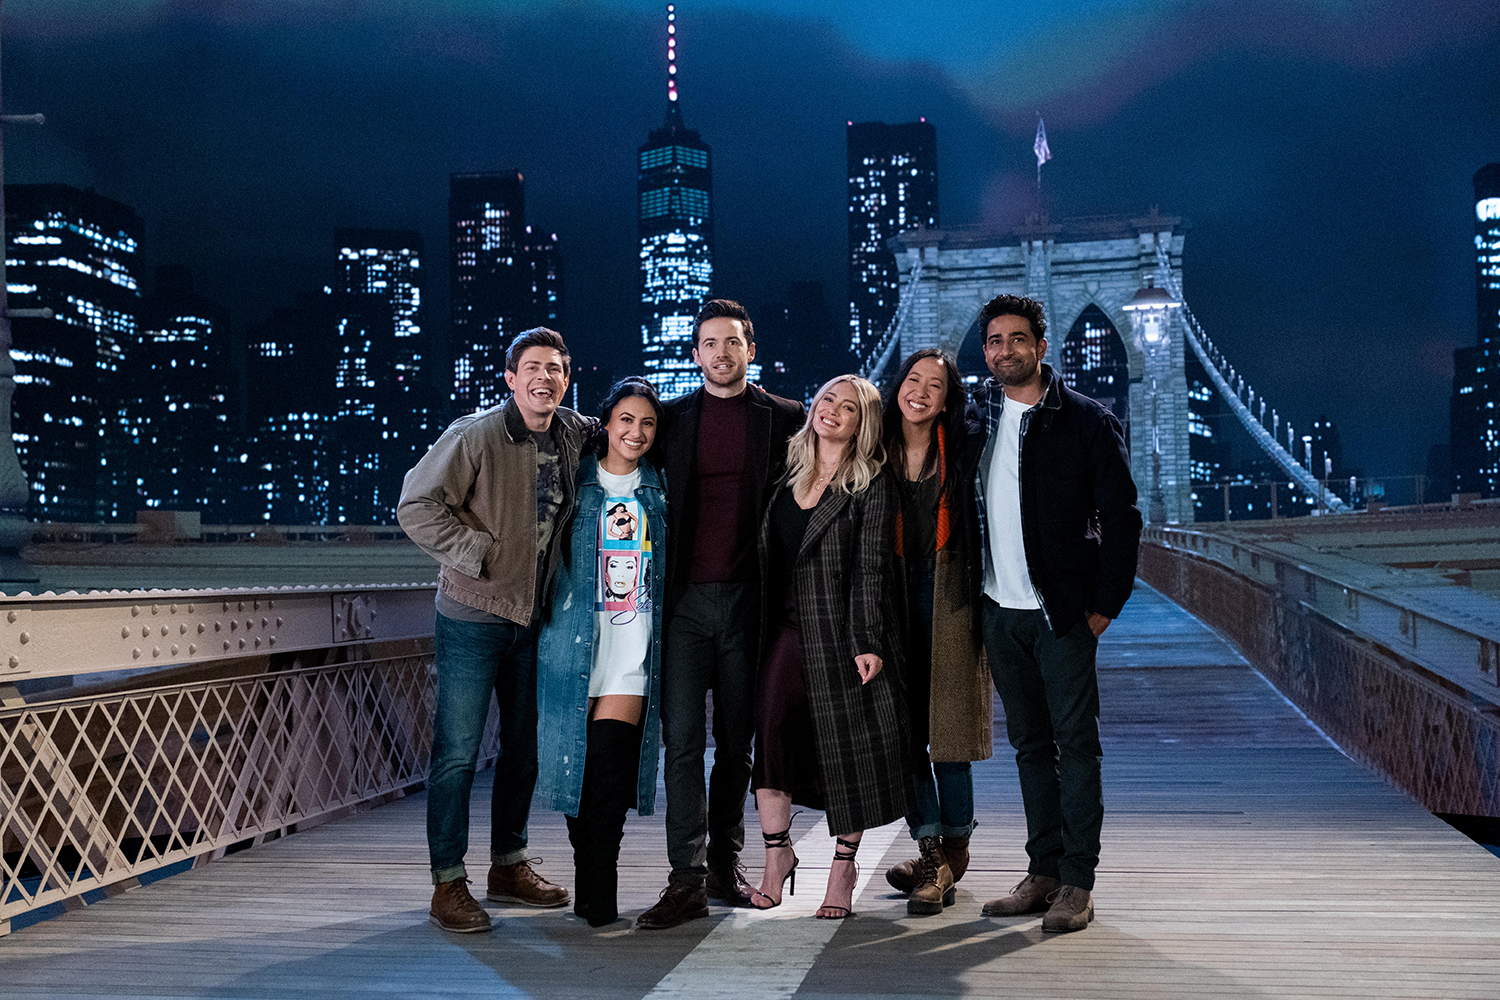 How I Met Your Father stars Chris Lowell, Francia Raisa, Tom Ainsley, Hilary Duff, Tien Tran, and Suraj Sharma on a recreation of the Brooklyn Bridge